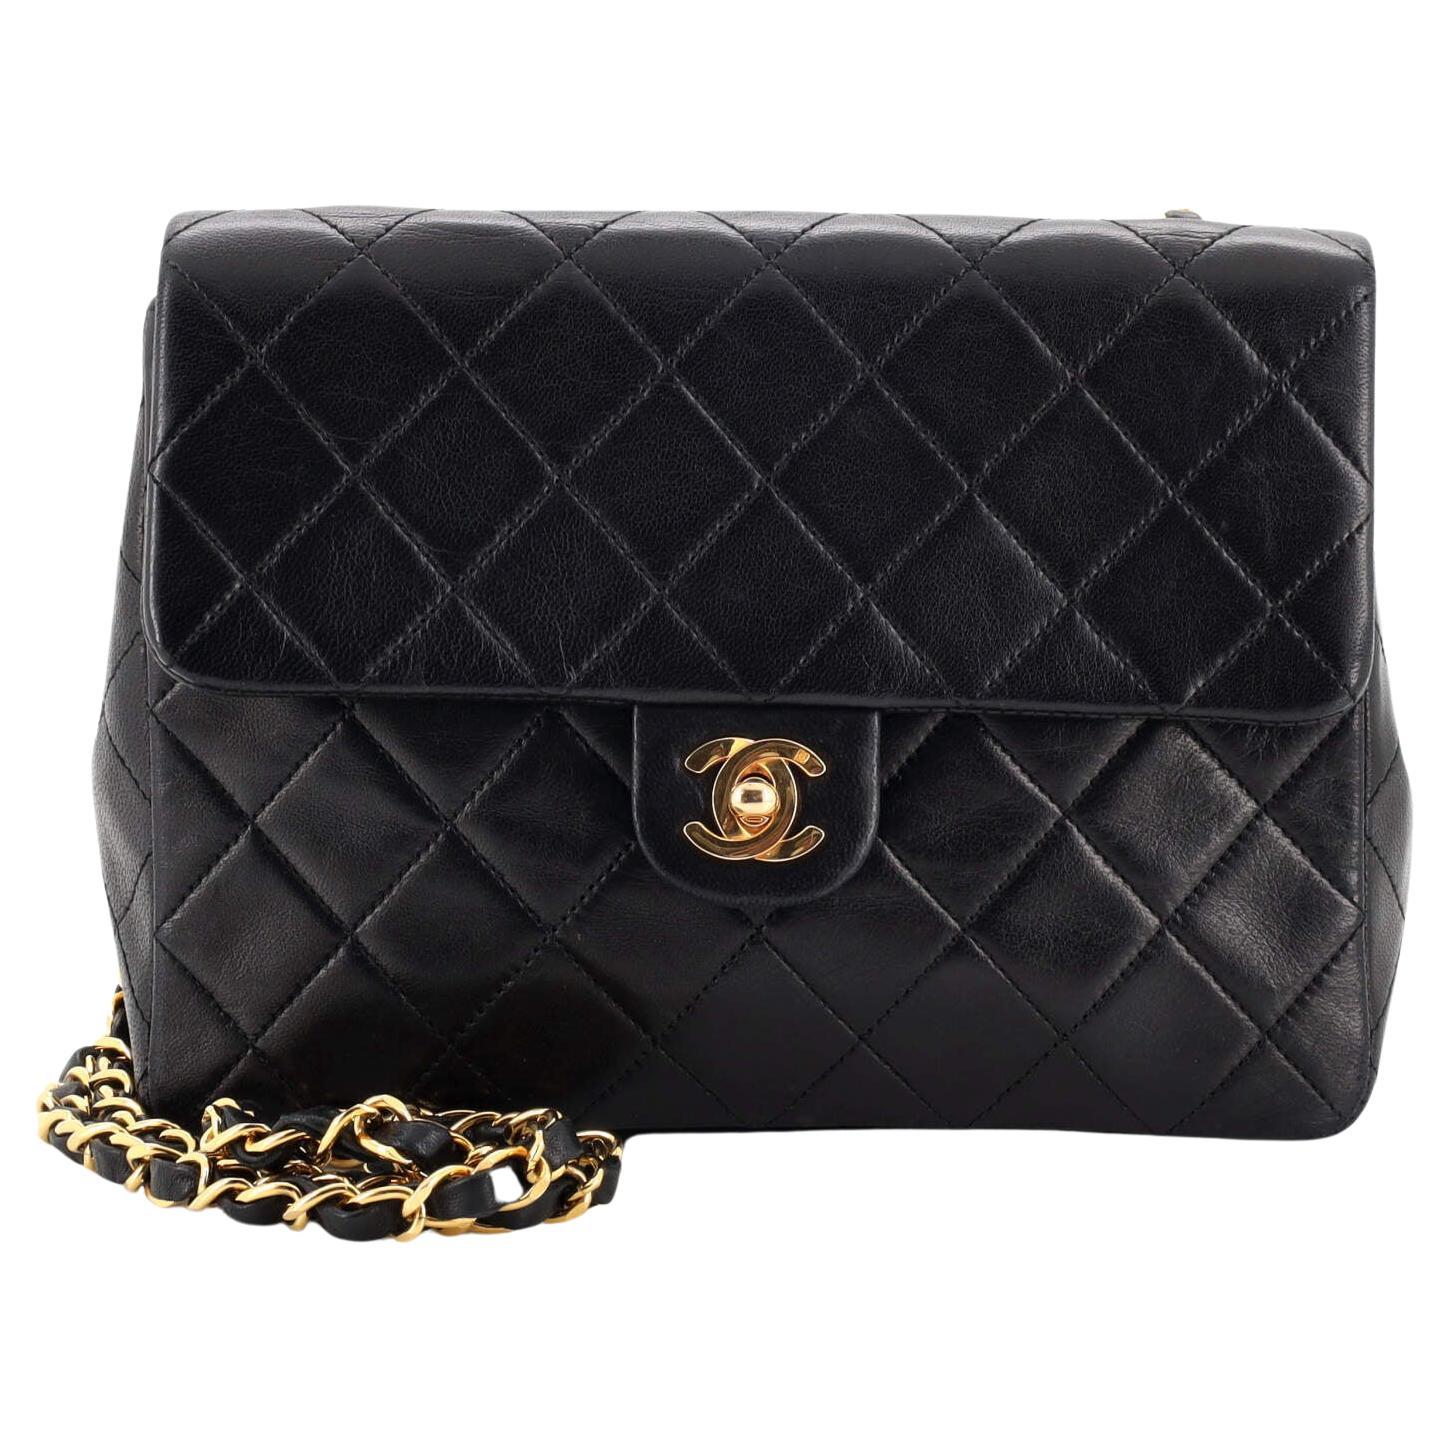 Chanel Lambskin Flap Bag - 826 For Sale on 1stDibs